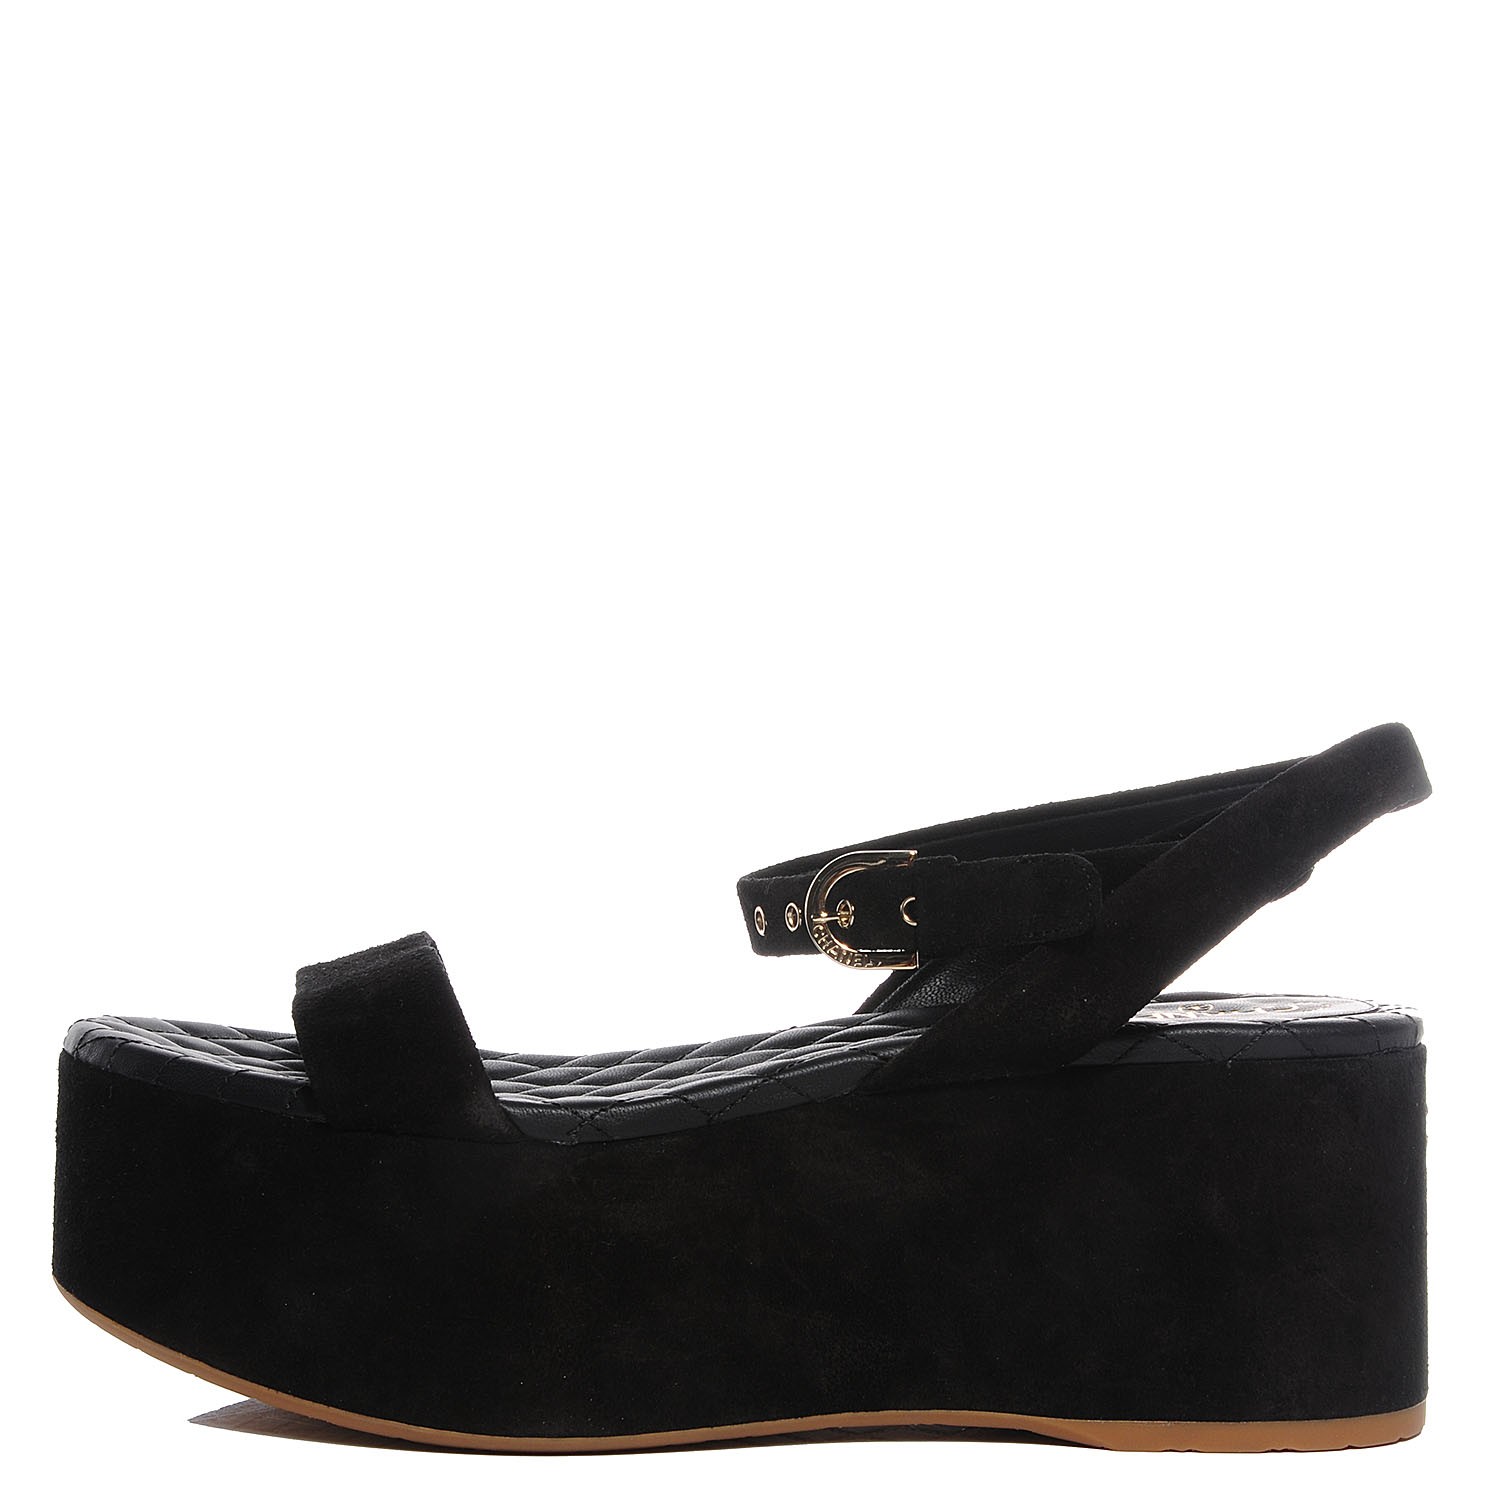 3 inch black wedge sandals